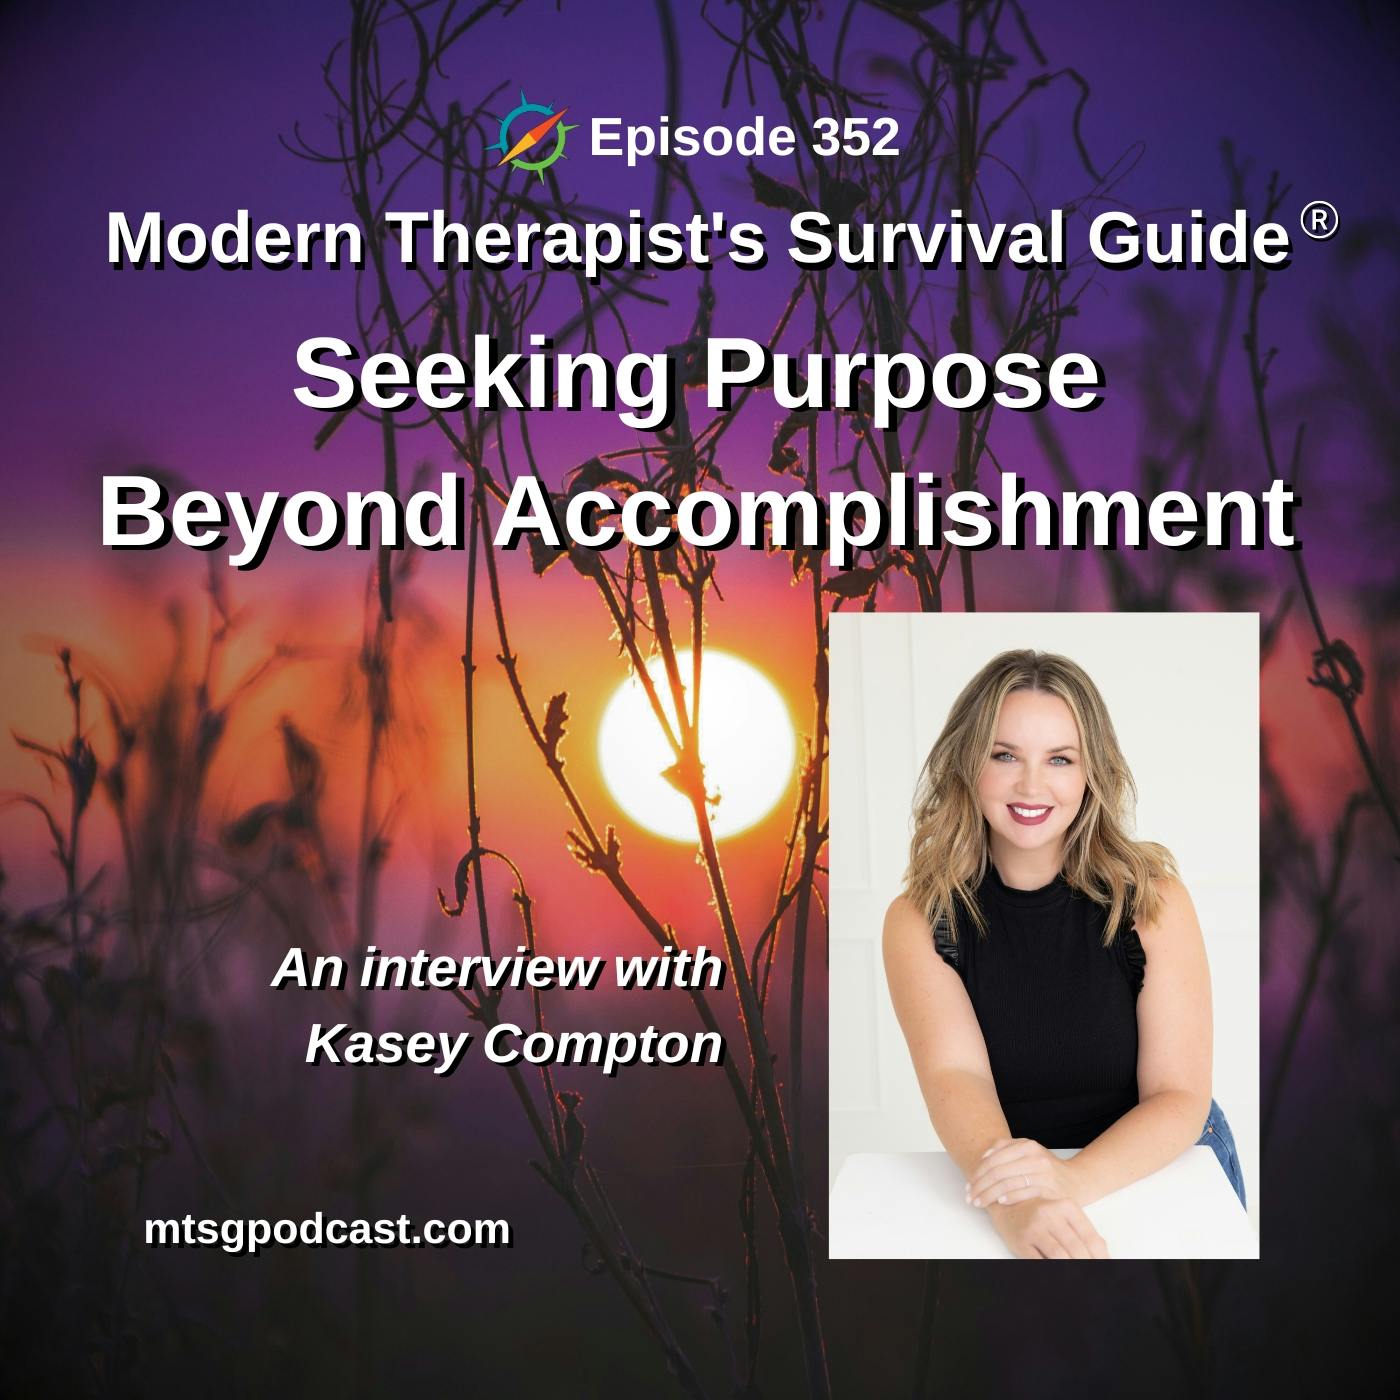 Seeking Purpose Beyond Accomplishment: An interview with Kasey Compton